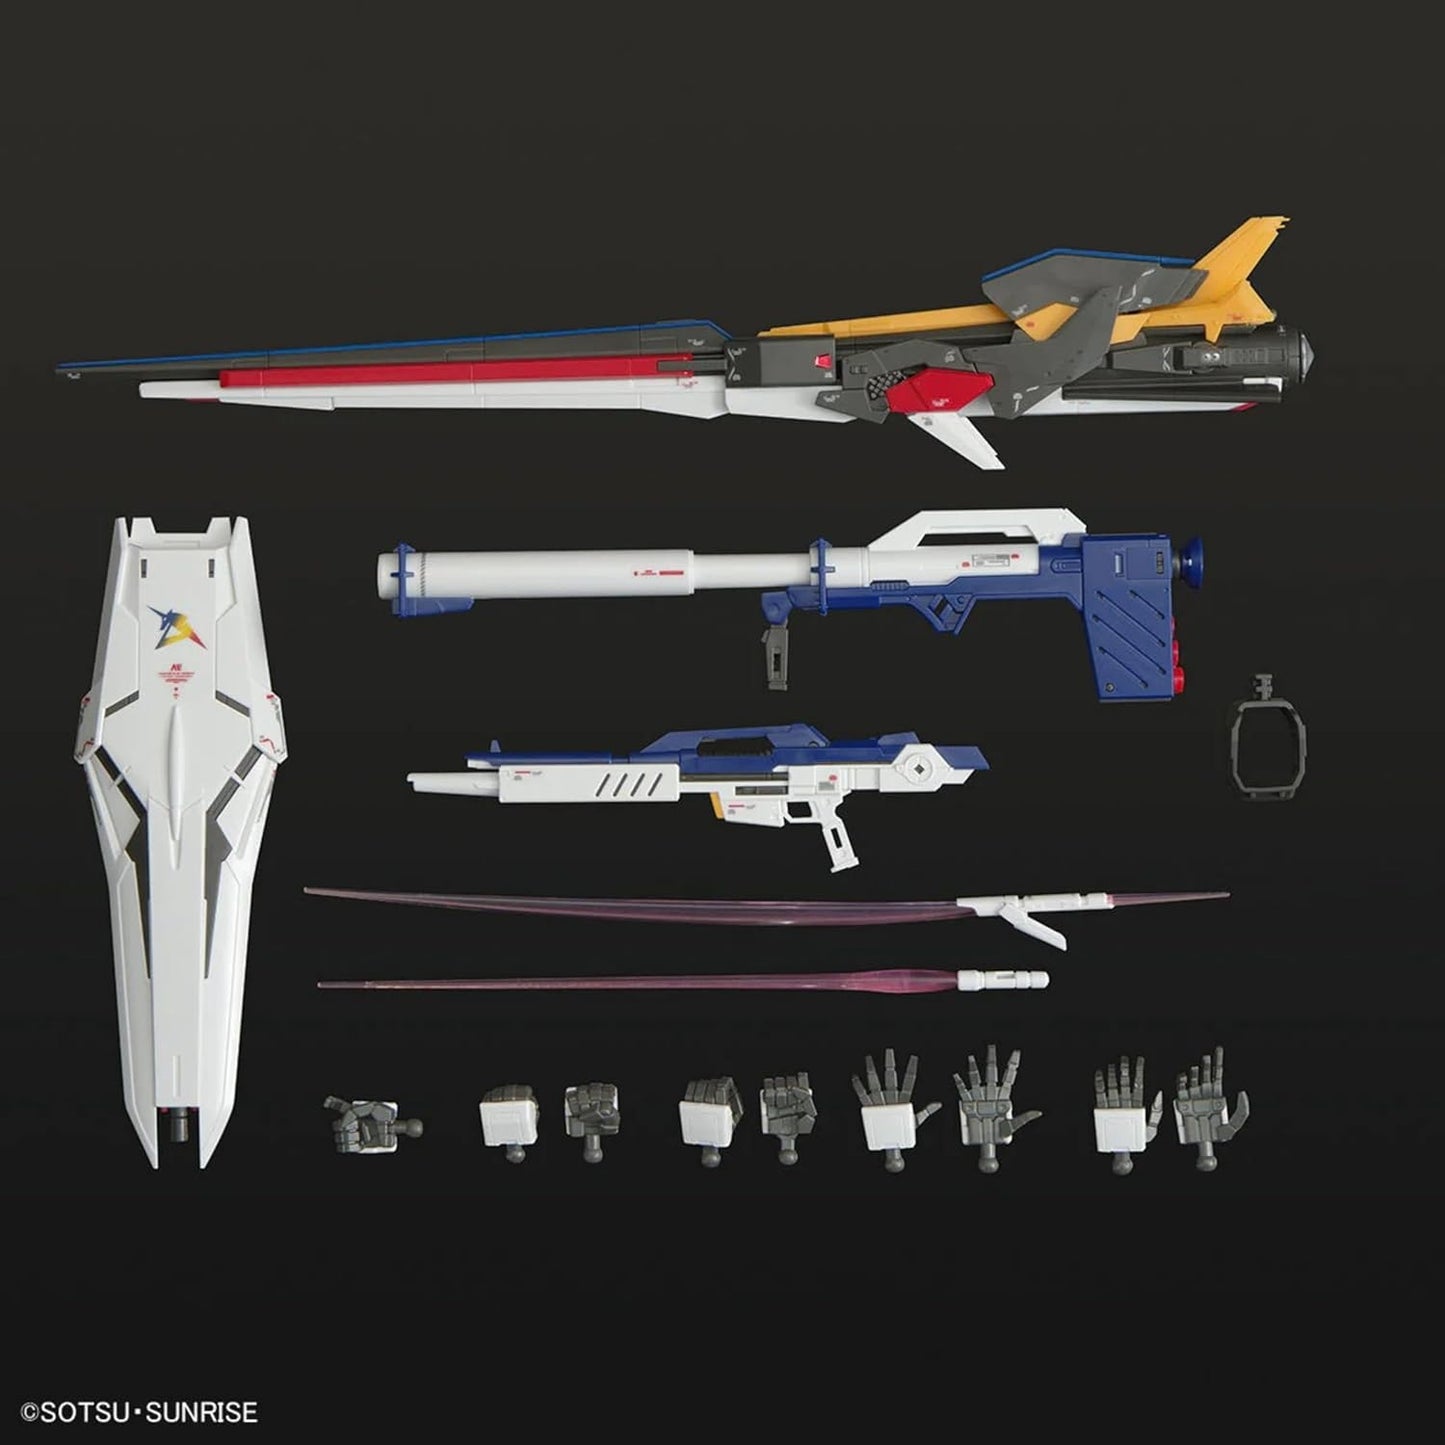 RG 1/144 Gundam SIDE-F Limited RX-93ff V Gundam Mobile Suit Gundam Char's Counterattack